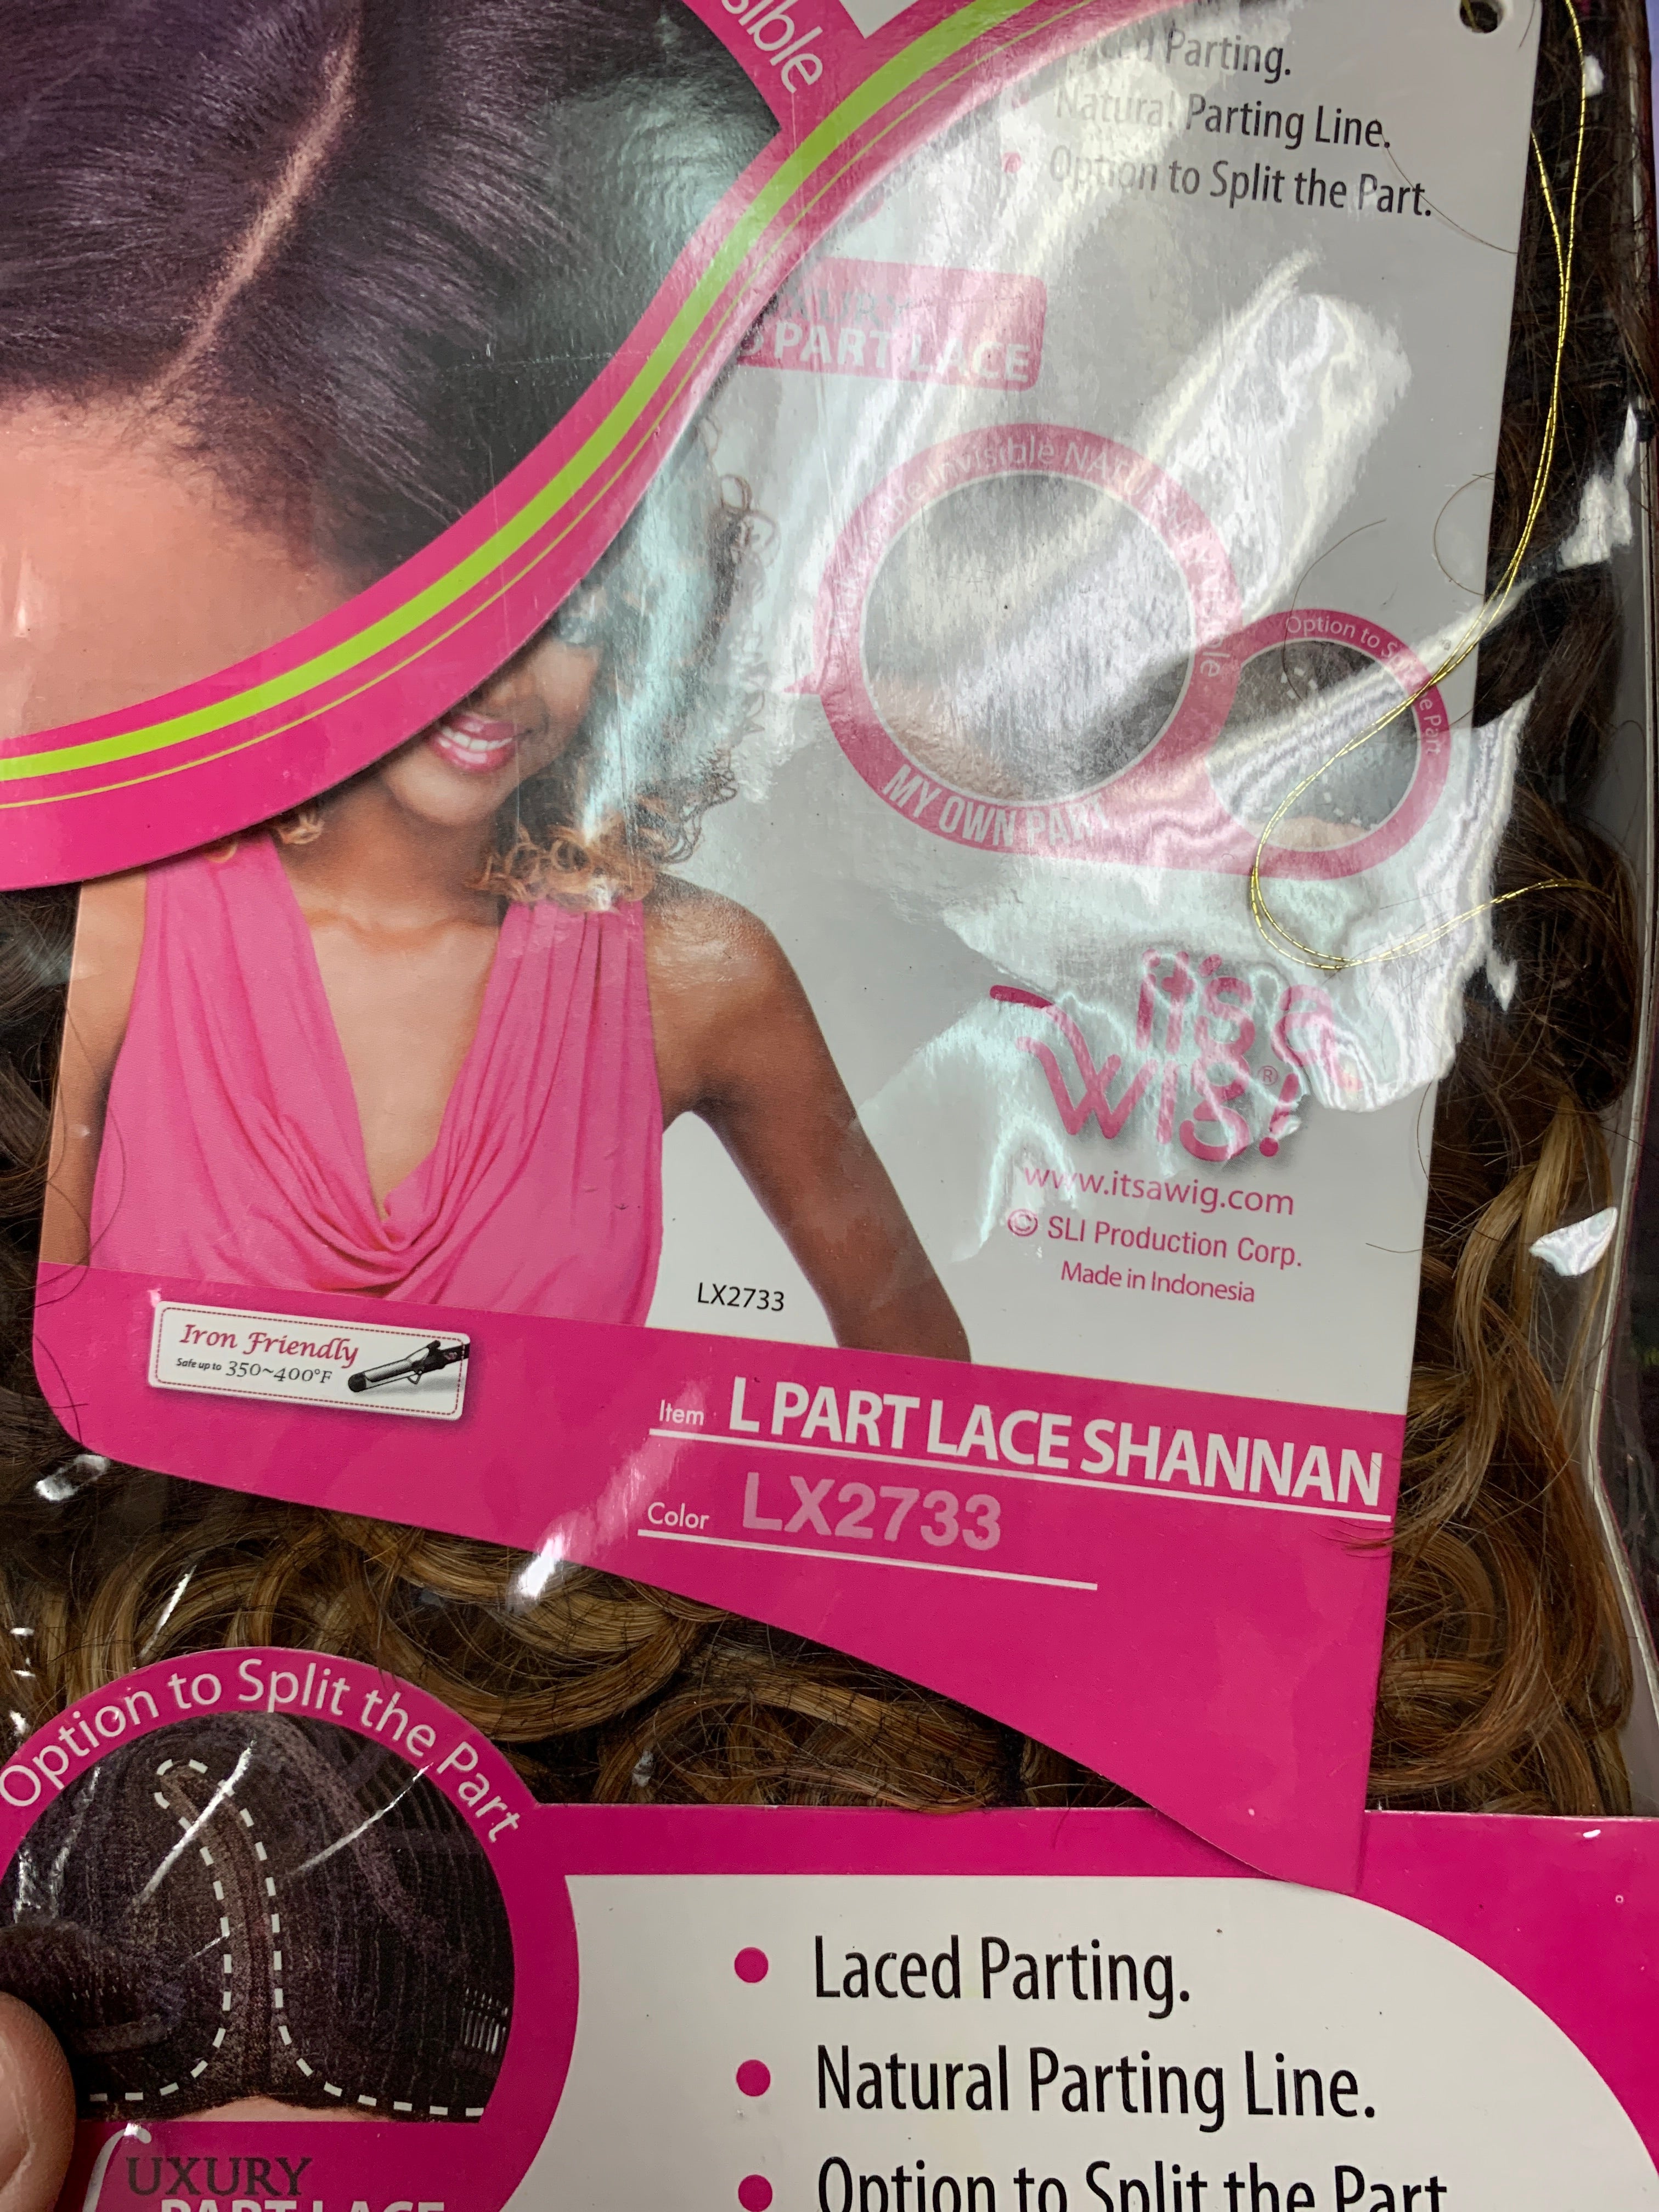 It’s a wig L part lace Shannan